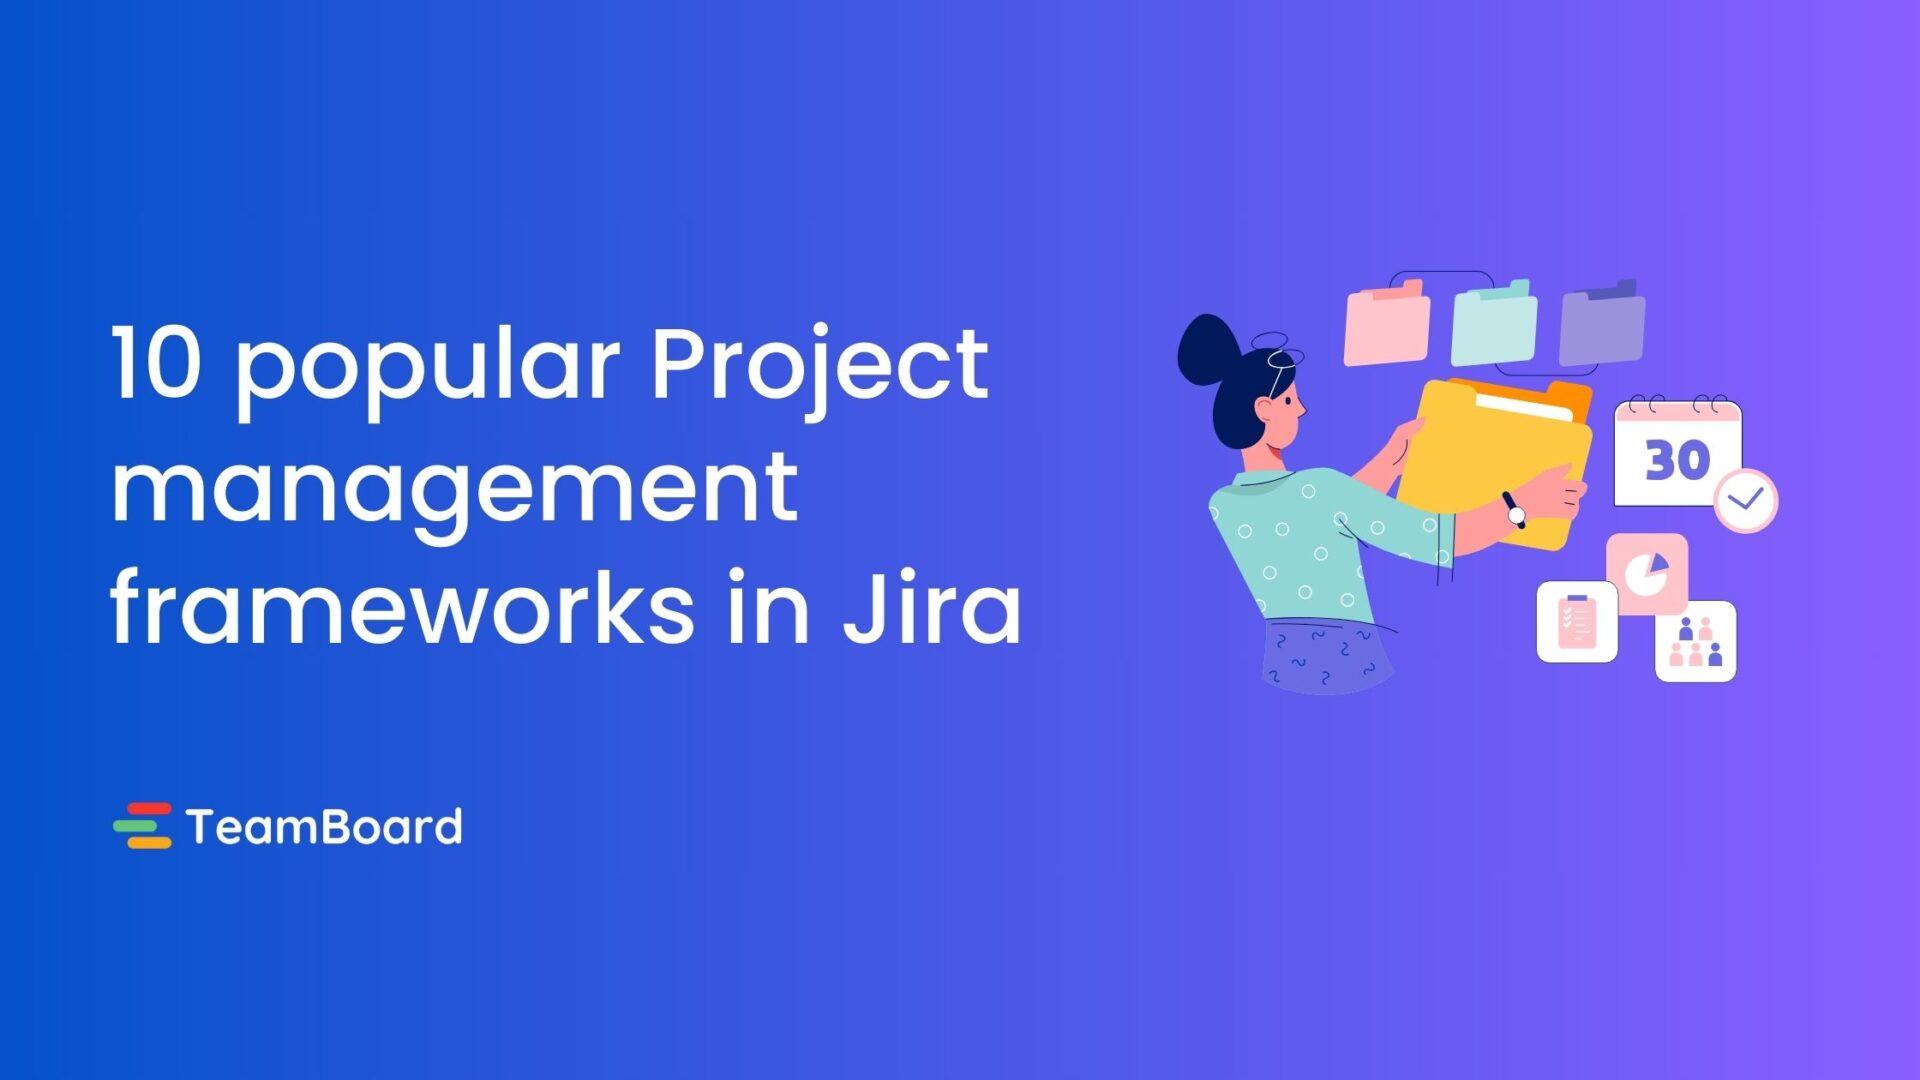 10 popular Project management frameworks in Jira